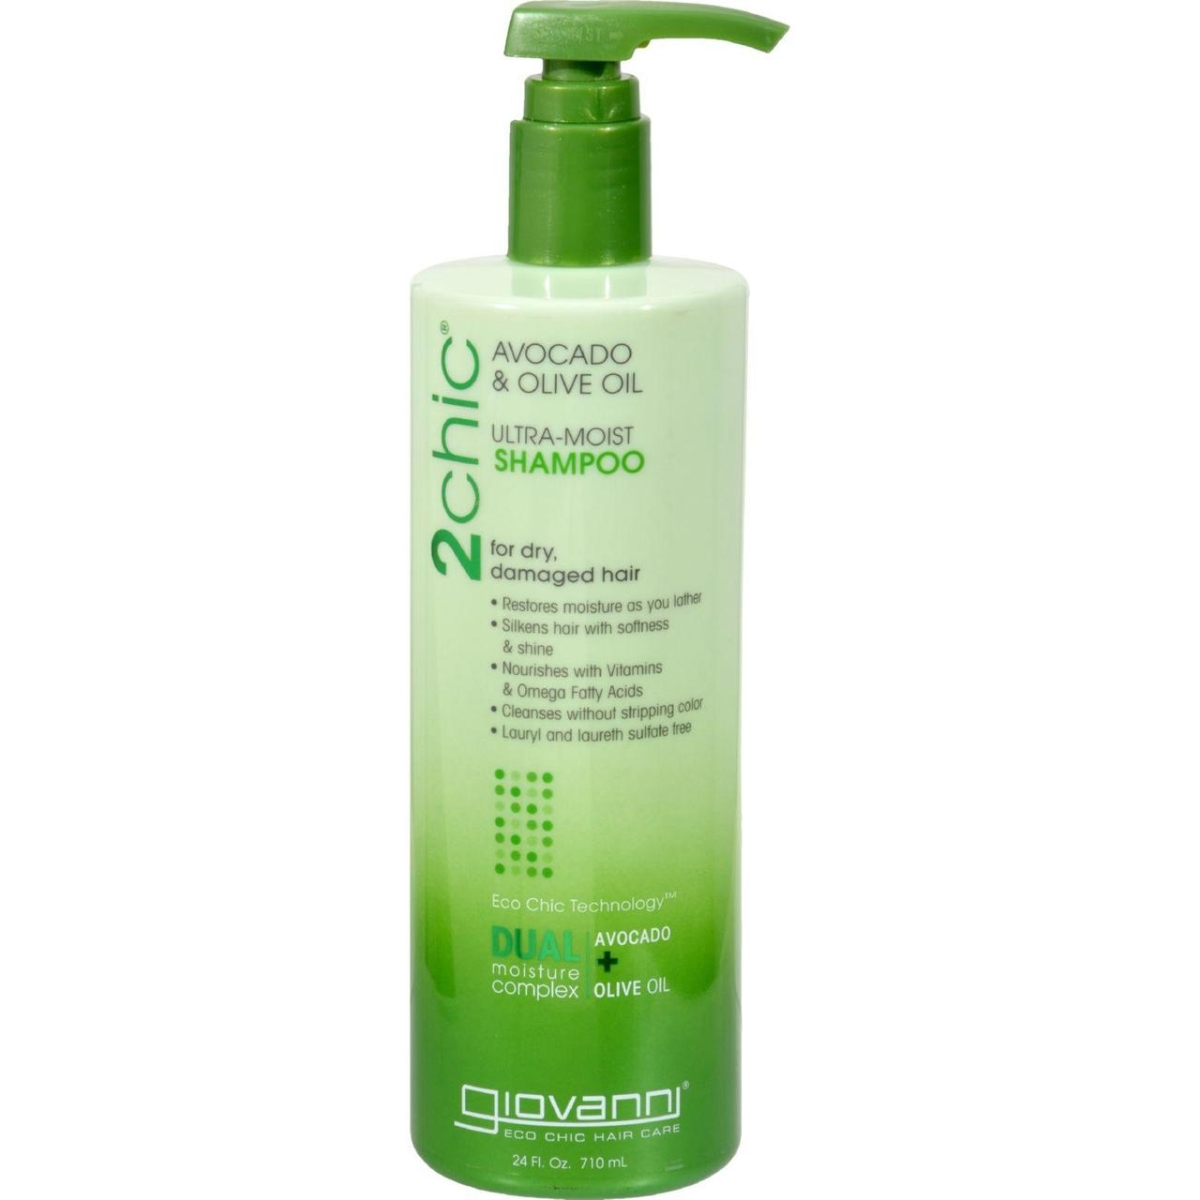 Hg1198050 24 Fl Oz Shampoo - 2chic Avocado & Olive Oil